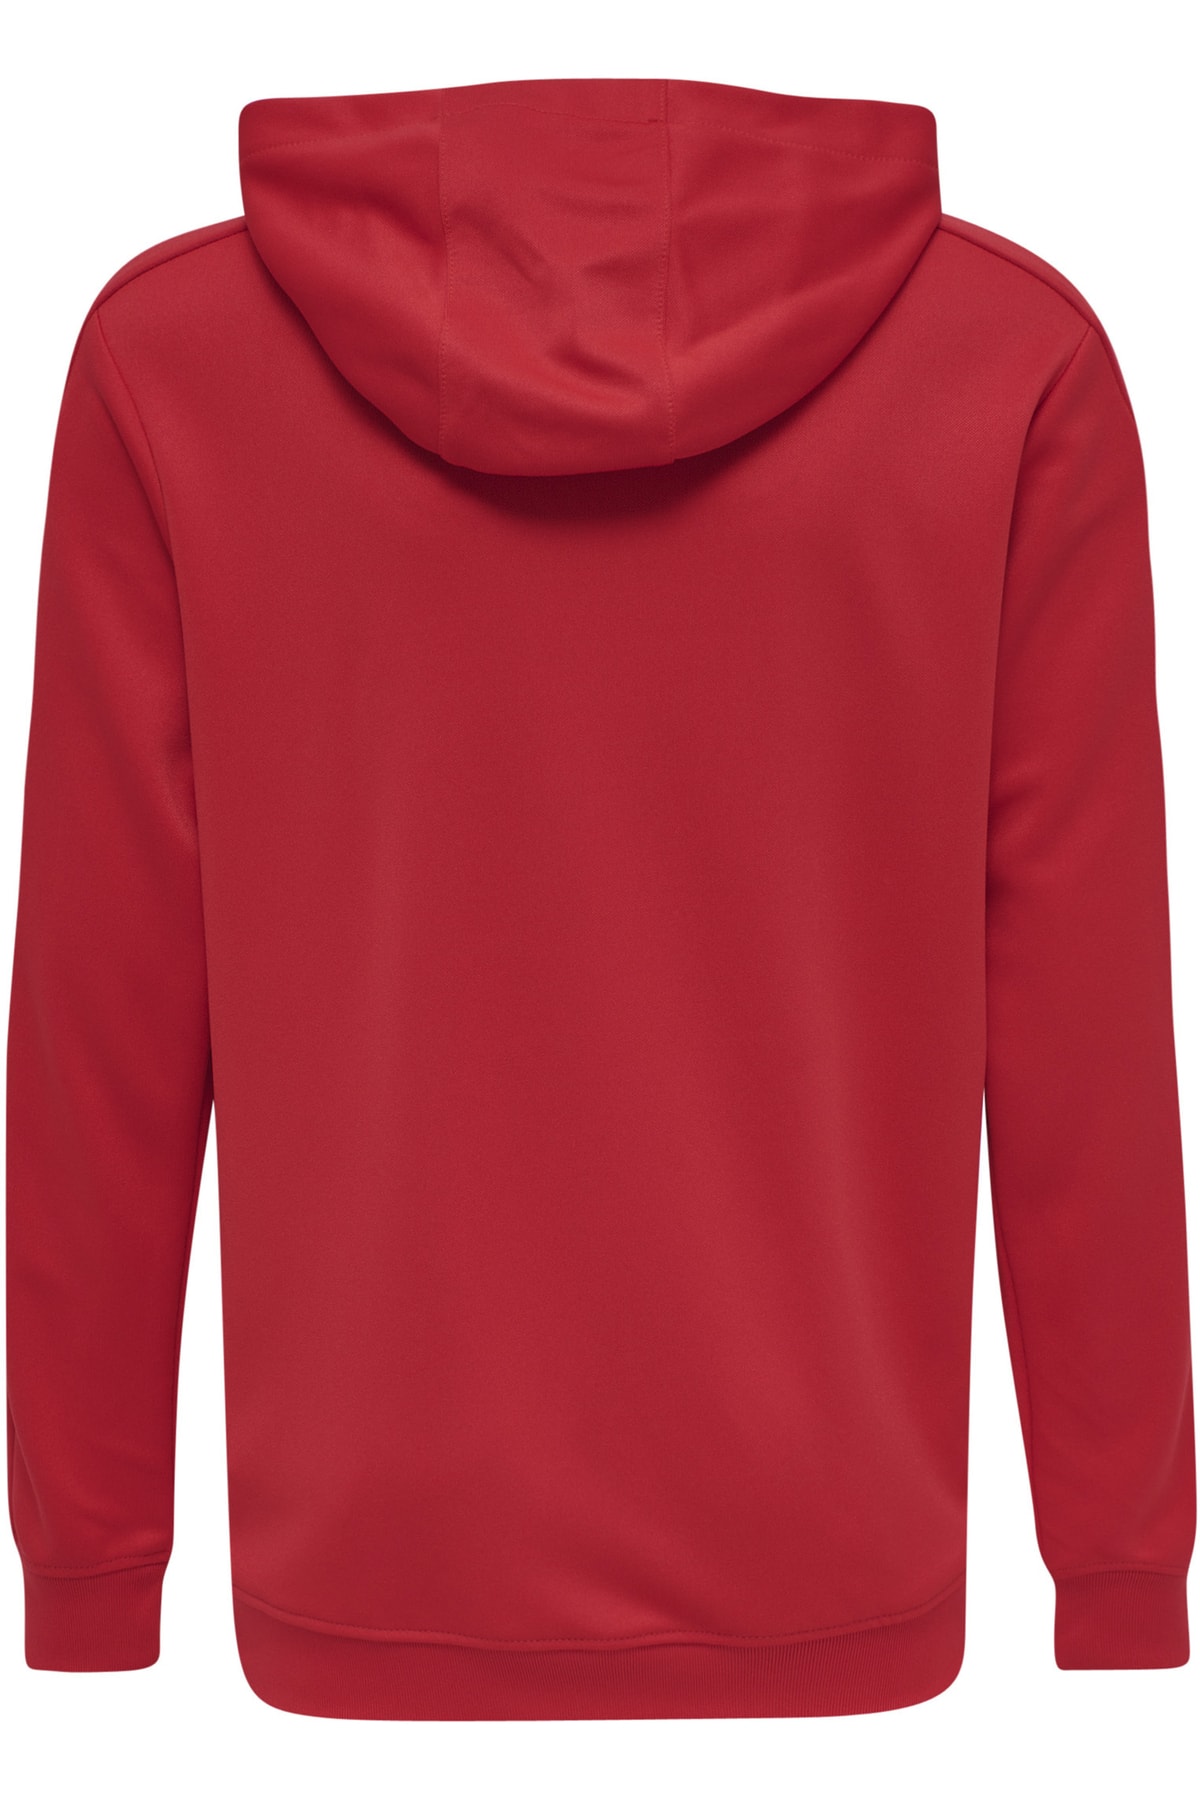 HUMMEL Sweatshirt Rot Regular Fit FN6468